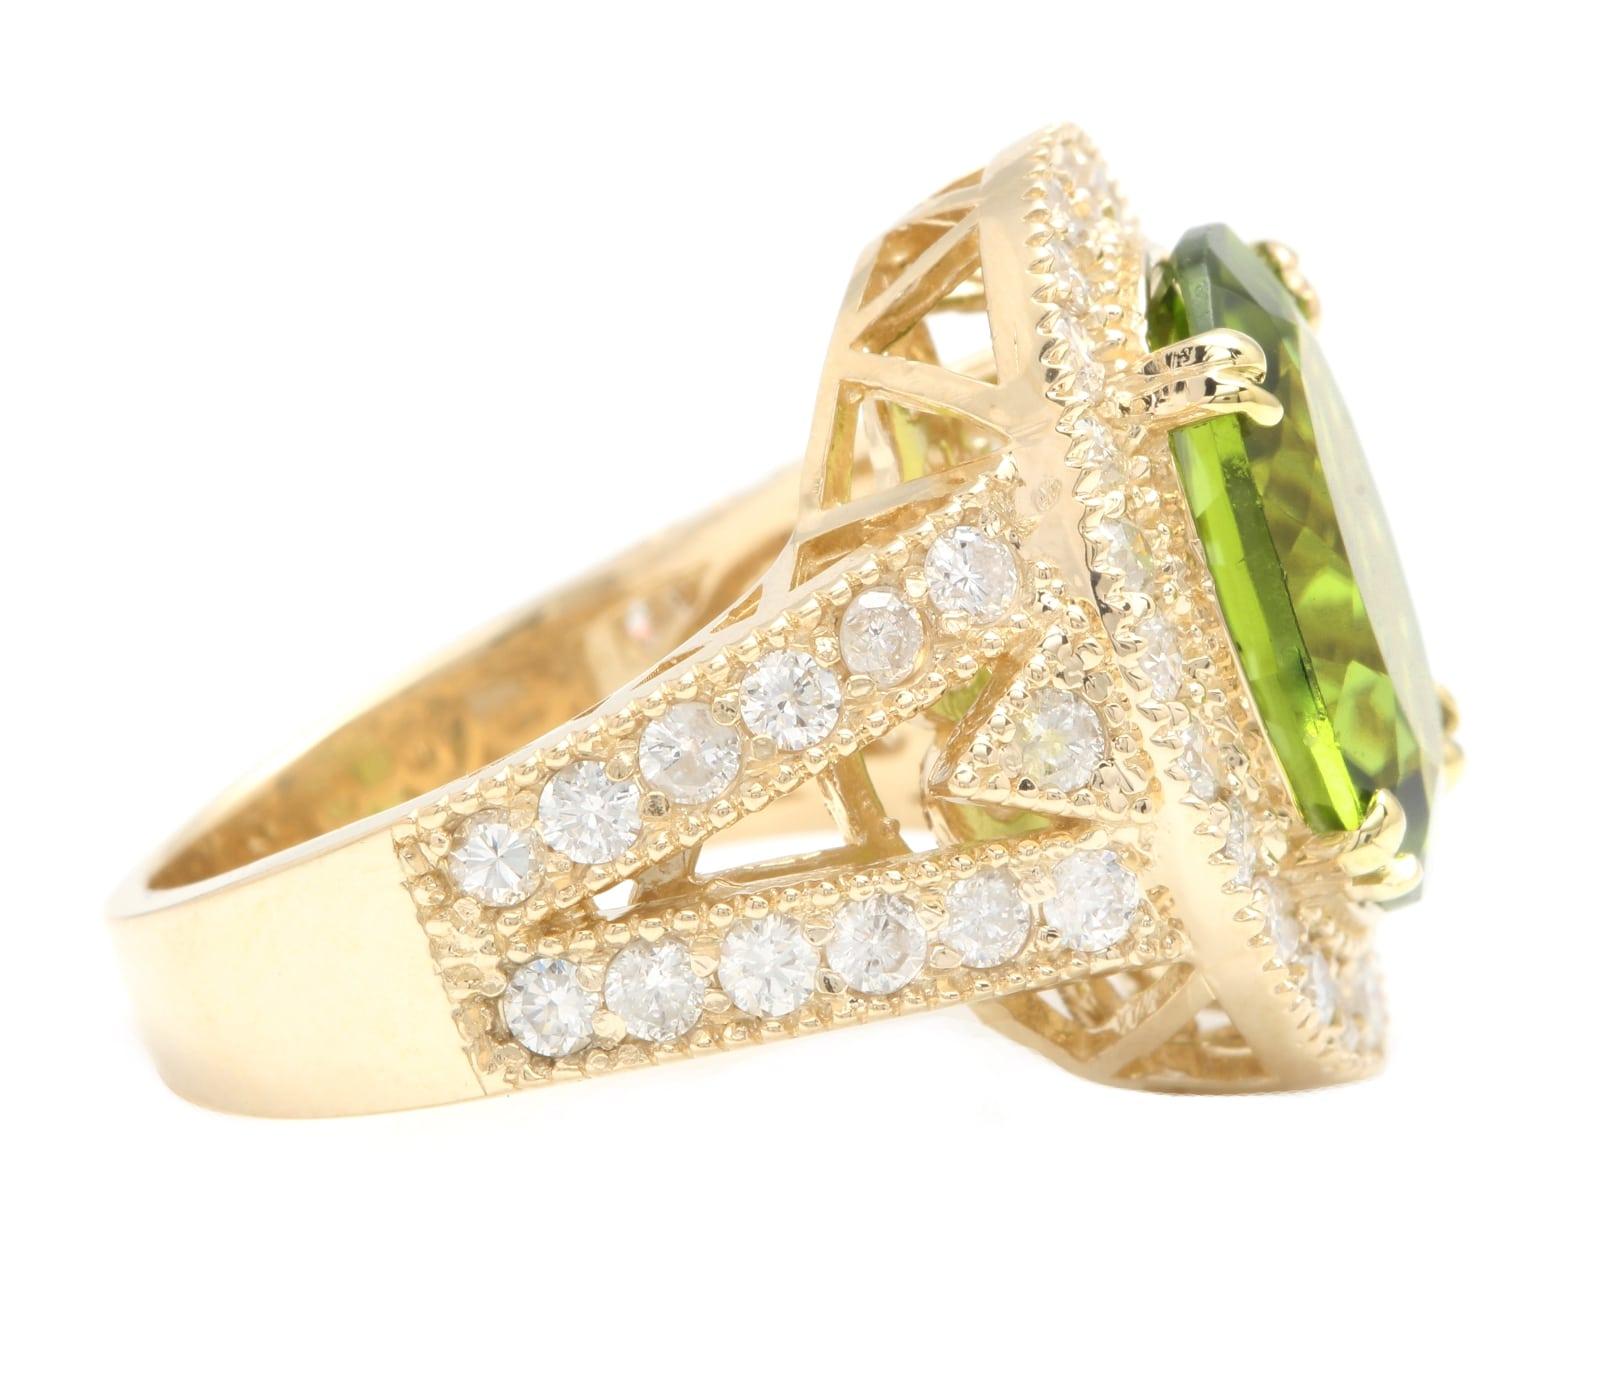 Mixed Cut 7.60 Carats Impressive Natural Peridot and Diamond 14K Yellow Gold Ring For Sale